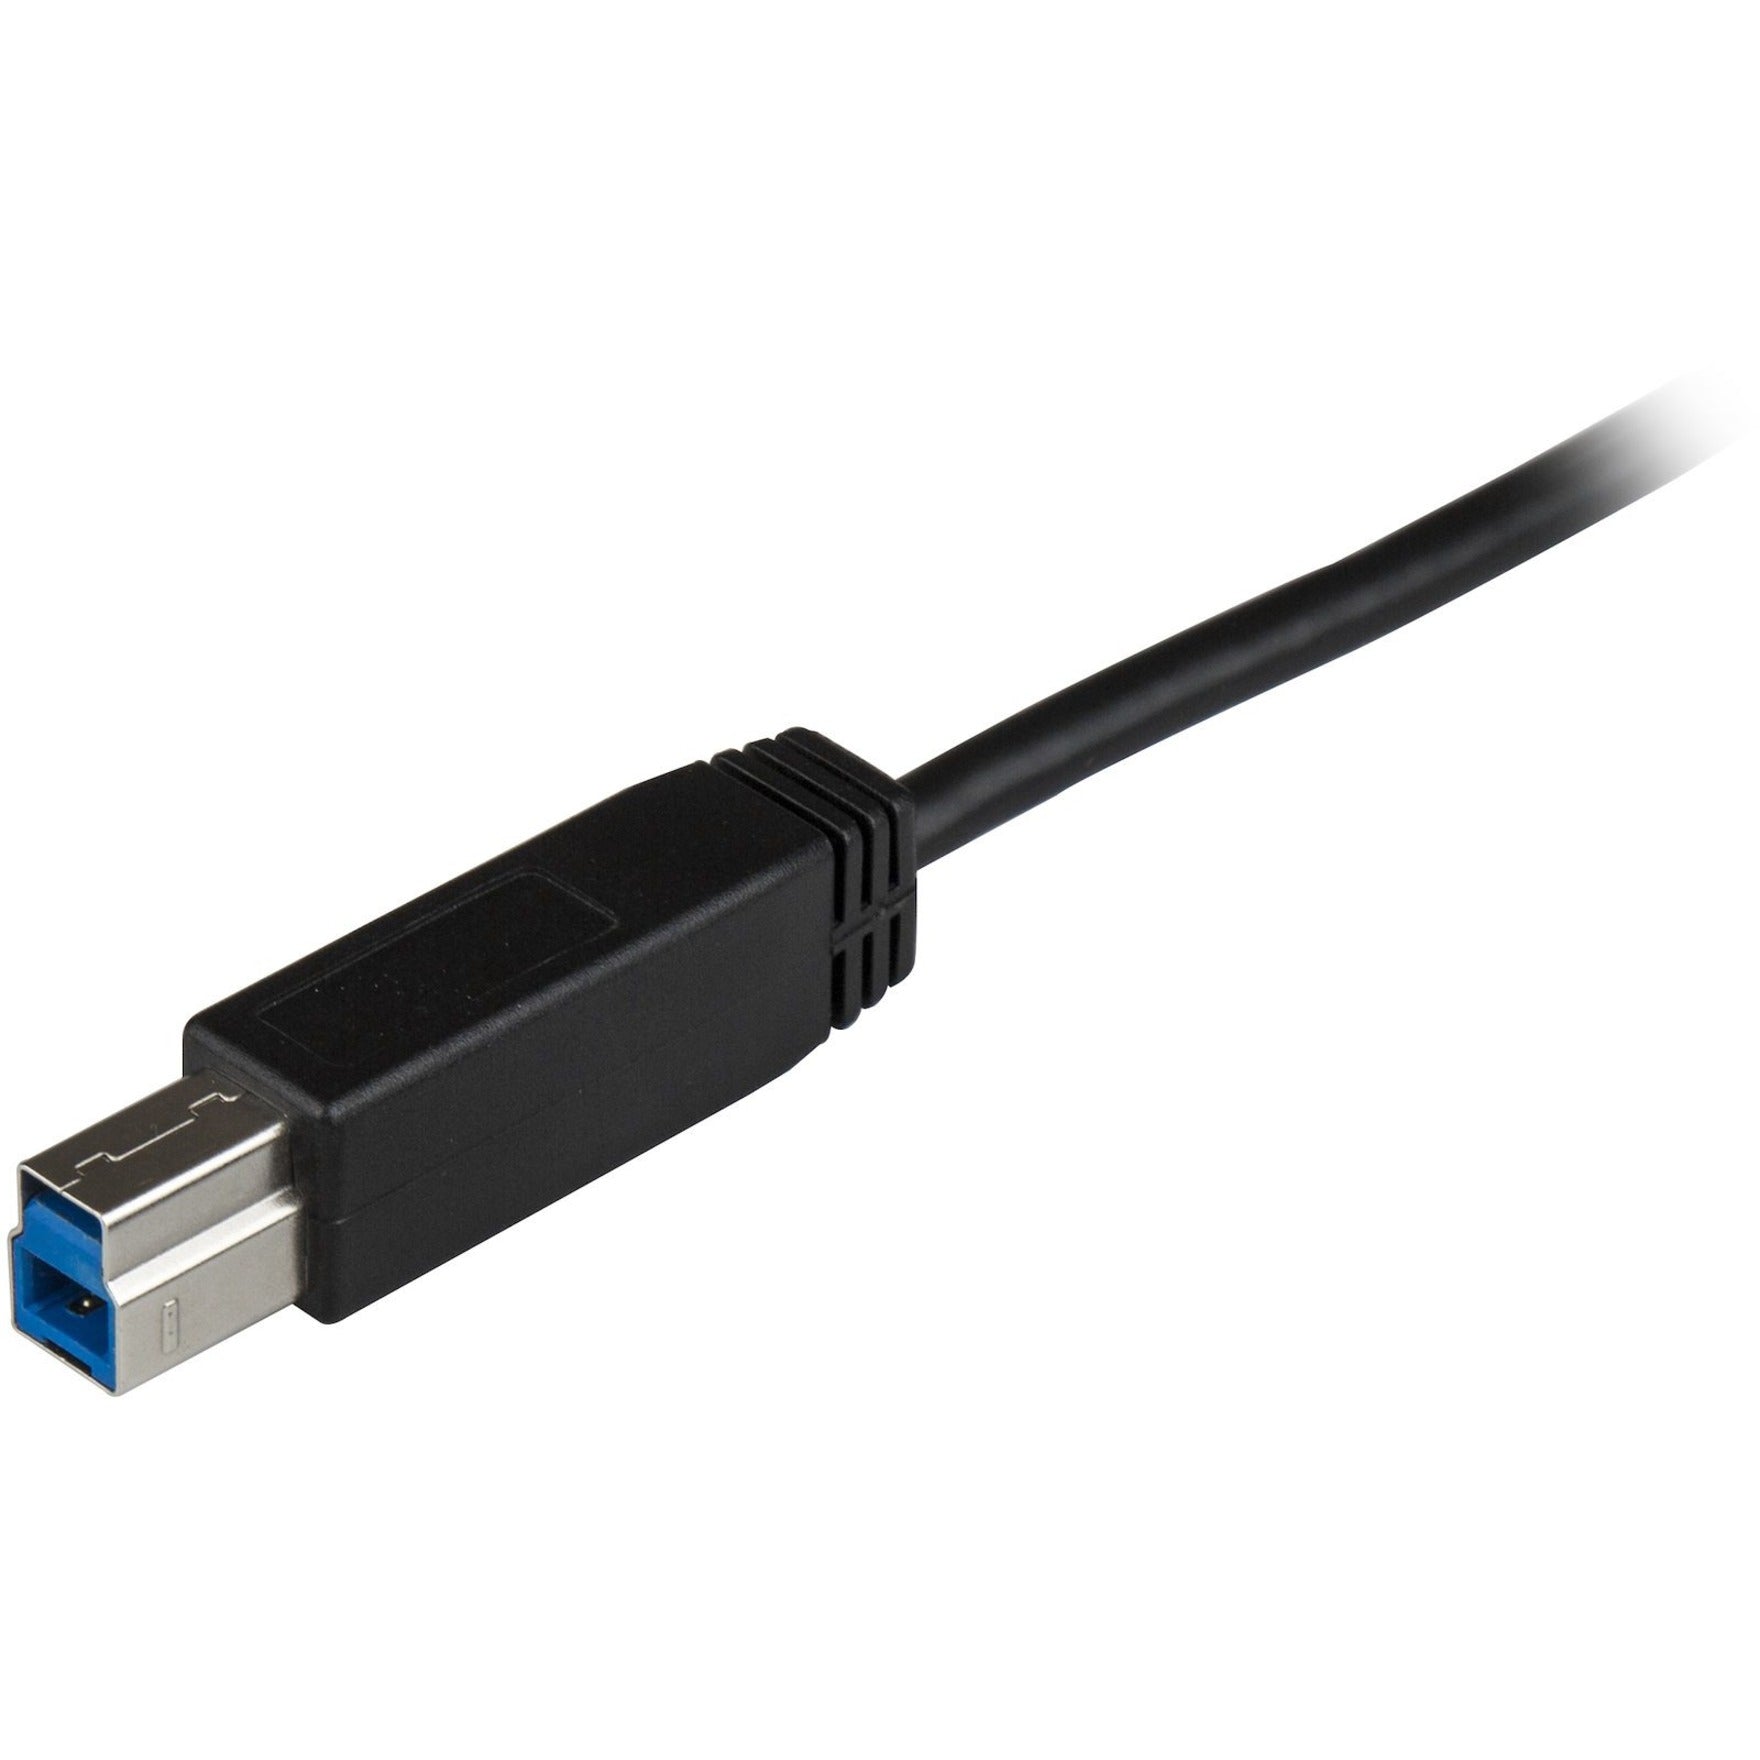 StarTech.com USB31CB1M USB 3.1 USB-C to USB-B Cable - 1m (3ft), 10Gbps Data Transfer Rate, Reversible, Black